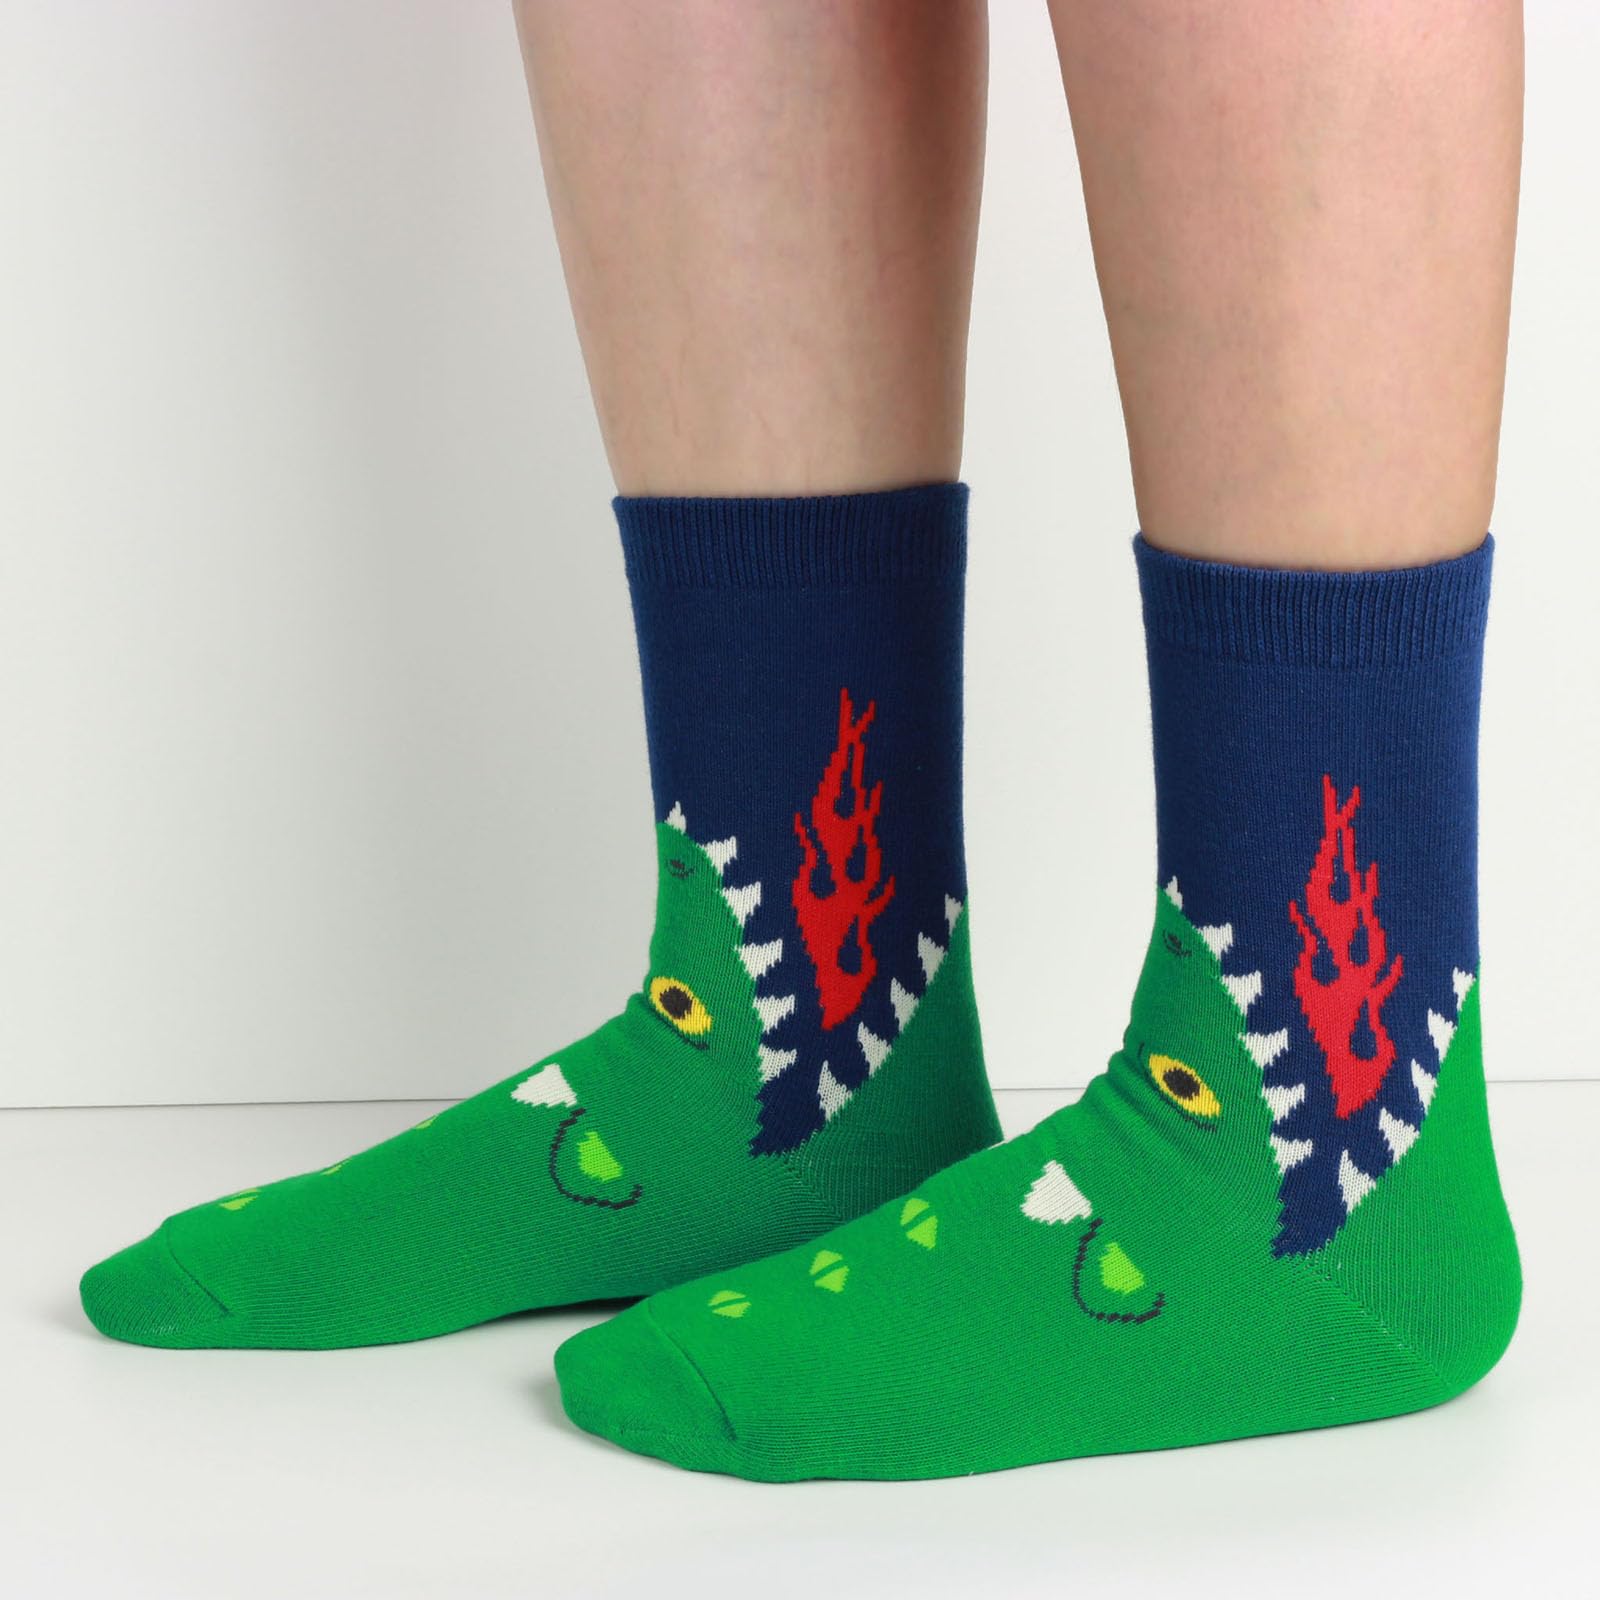 COTTON DAY Kids Boys Fun Novelty Socks Colorful Pattern Design 8-10 Years Shark Stripes Size L (10)